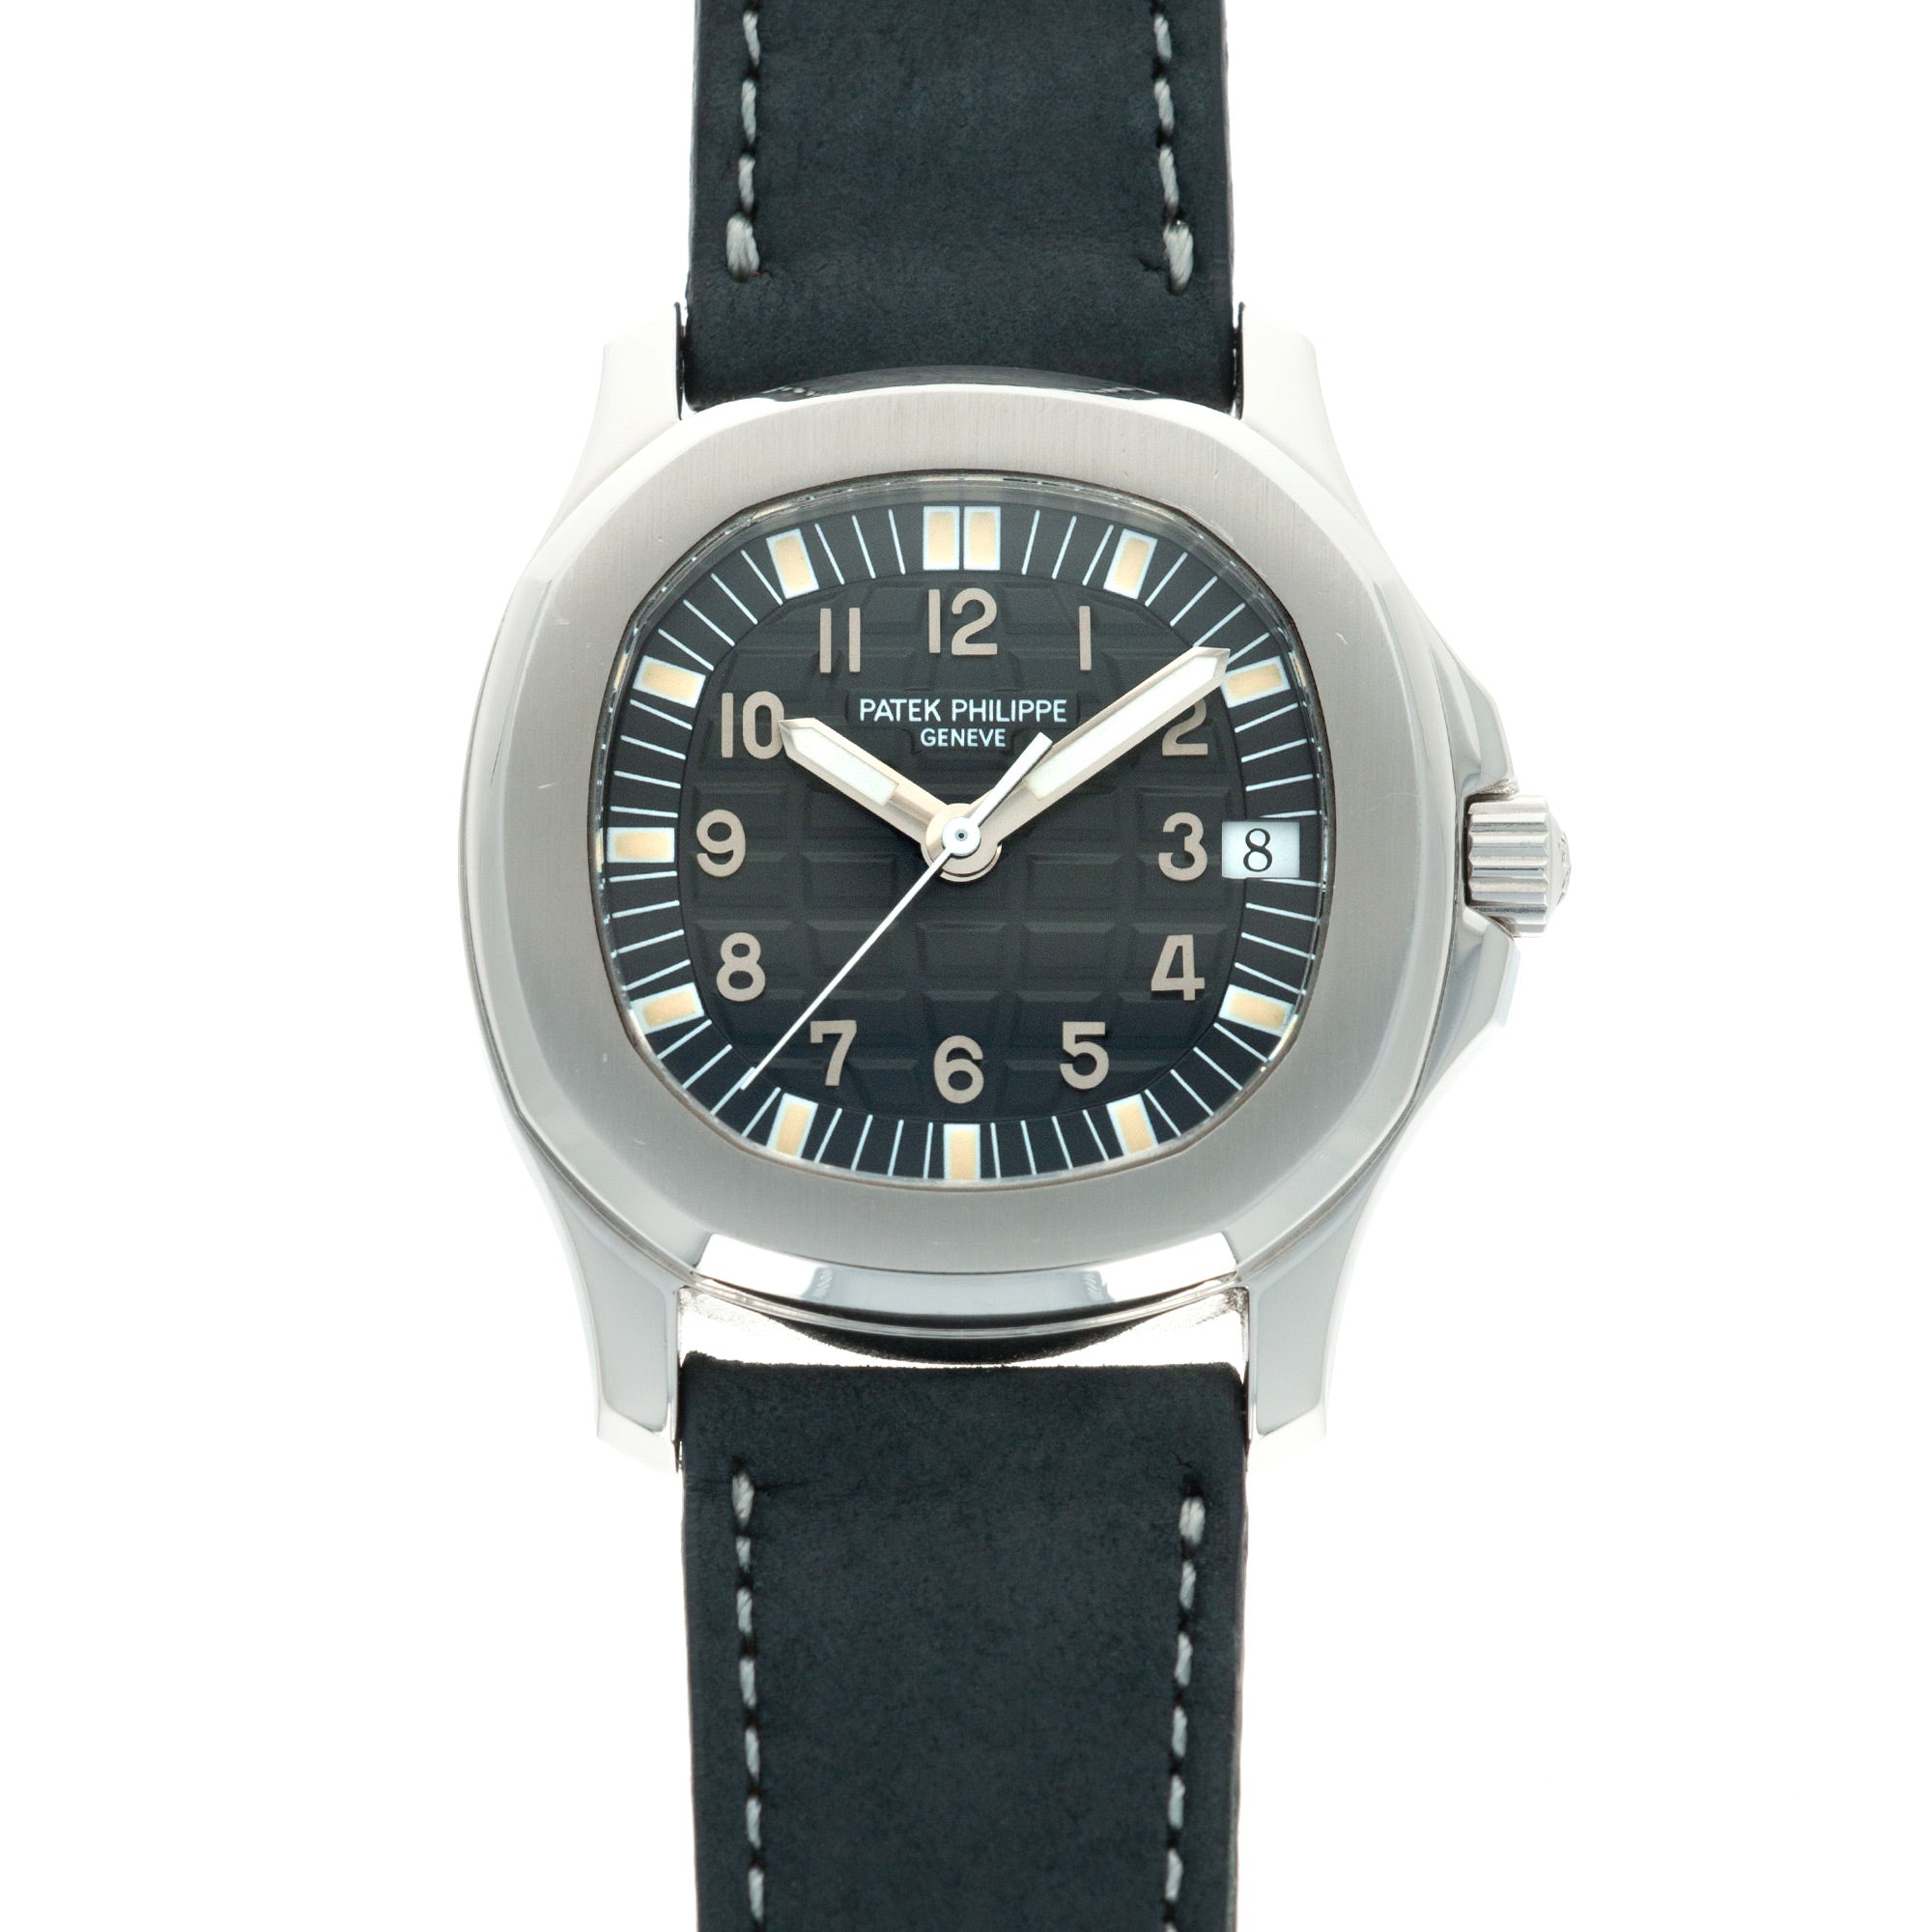 Patek Philippe - Patek Philippe Aquanaut Automatic Watch Ref. 5060, First Series Aquanaut with Original Paper - The Keystone Watches